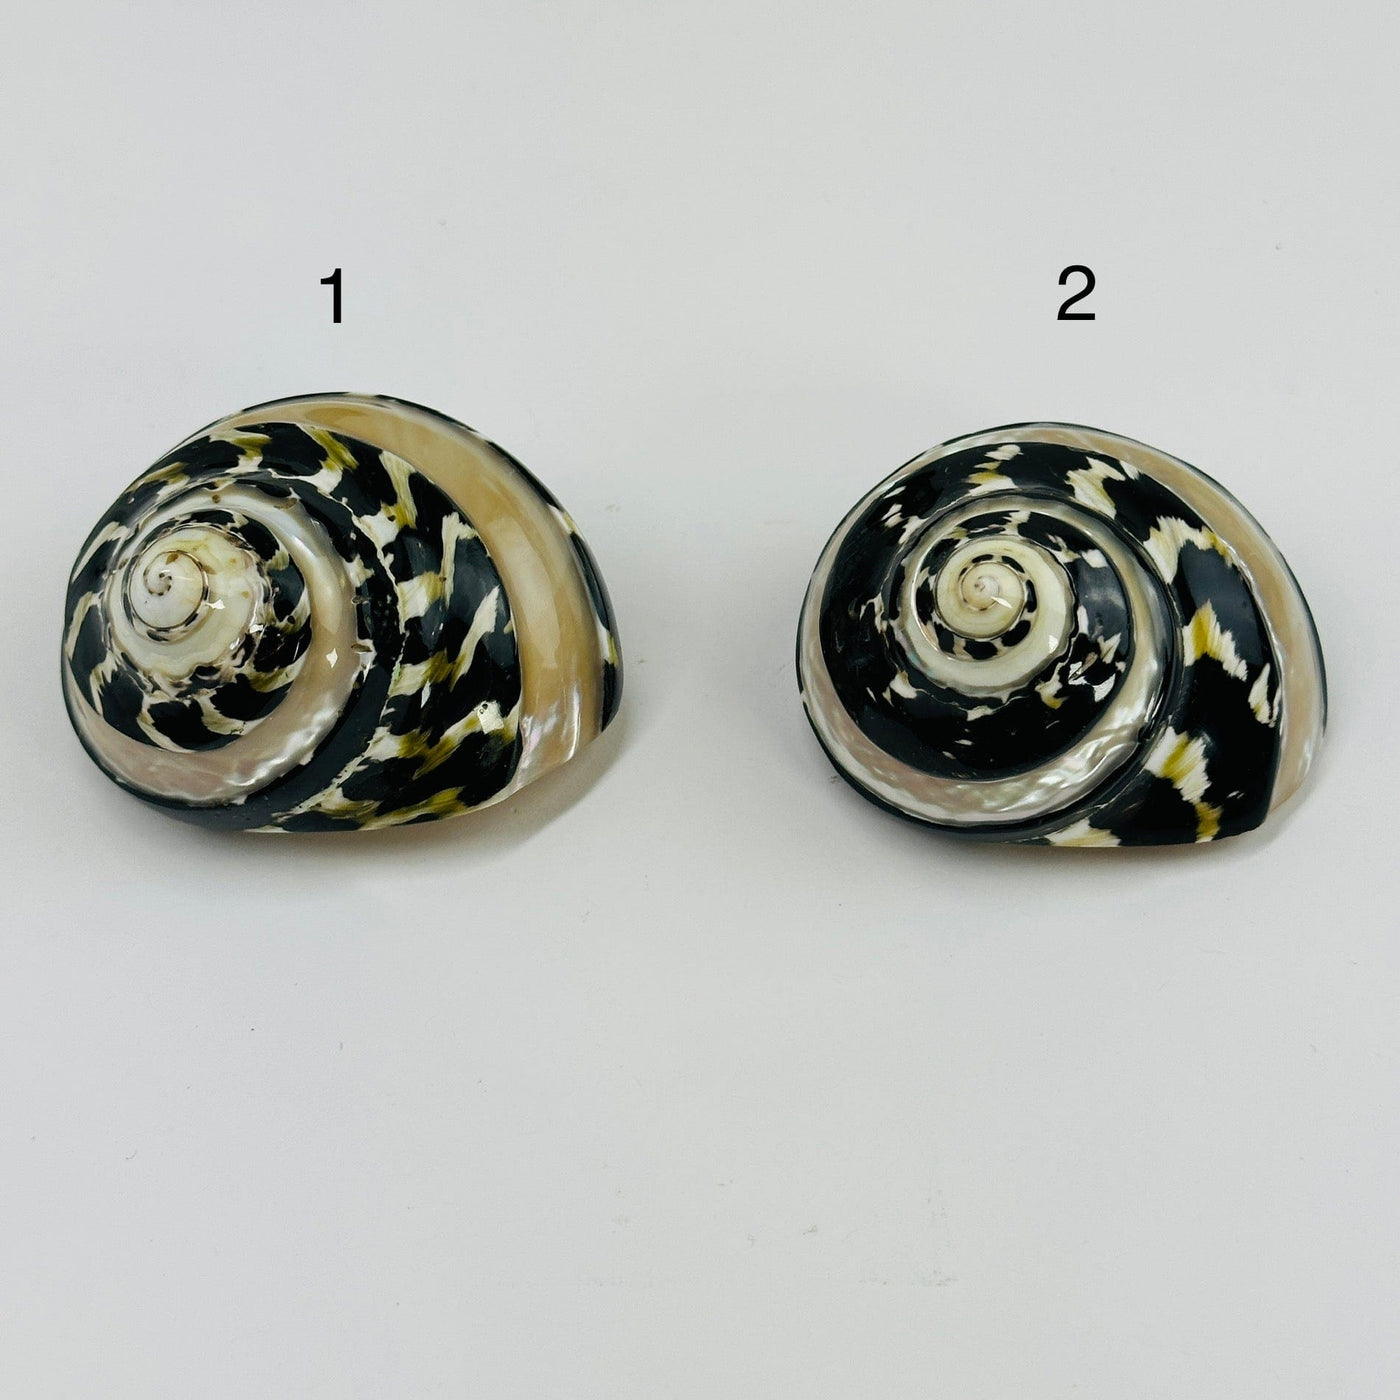 Cittarium Pica Polished Snail Shells on white background